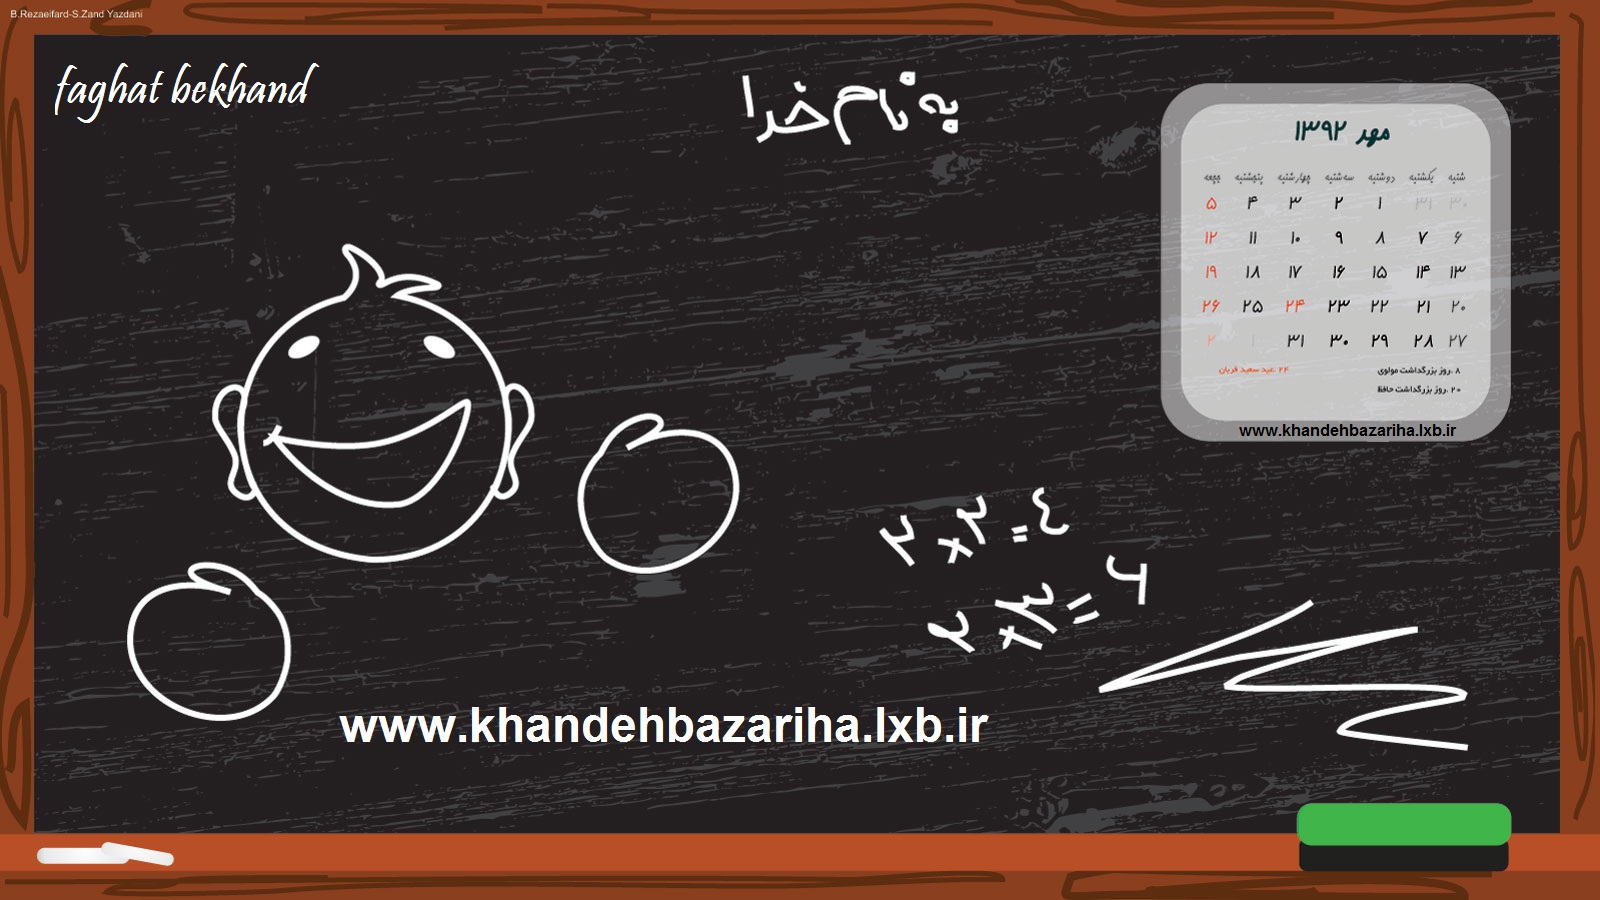 تخت سیاه وبلاگ www.khandehbazariha.lxb.ir